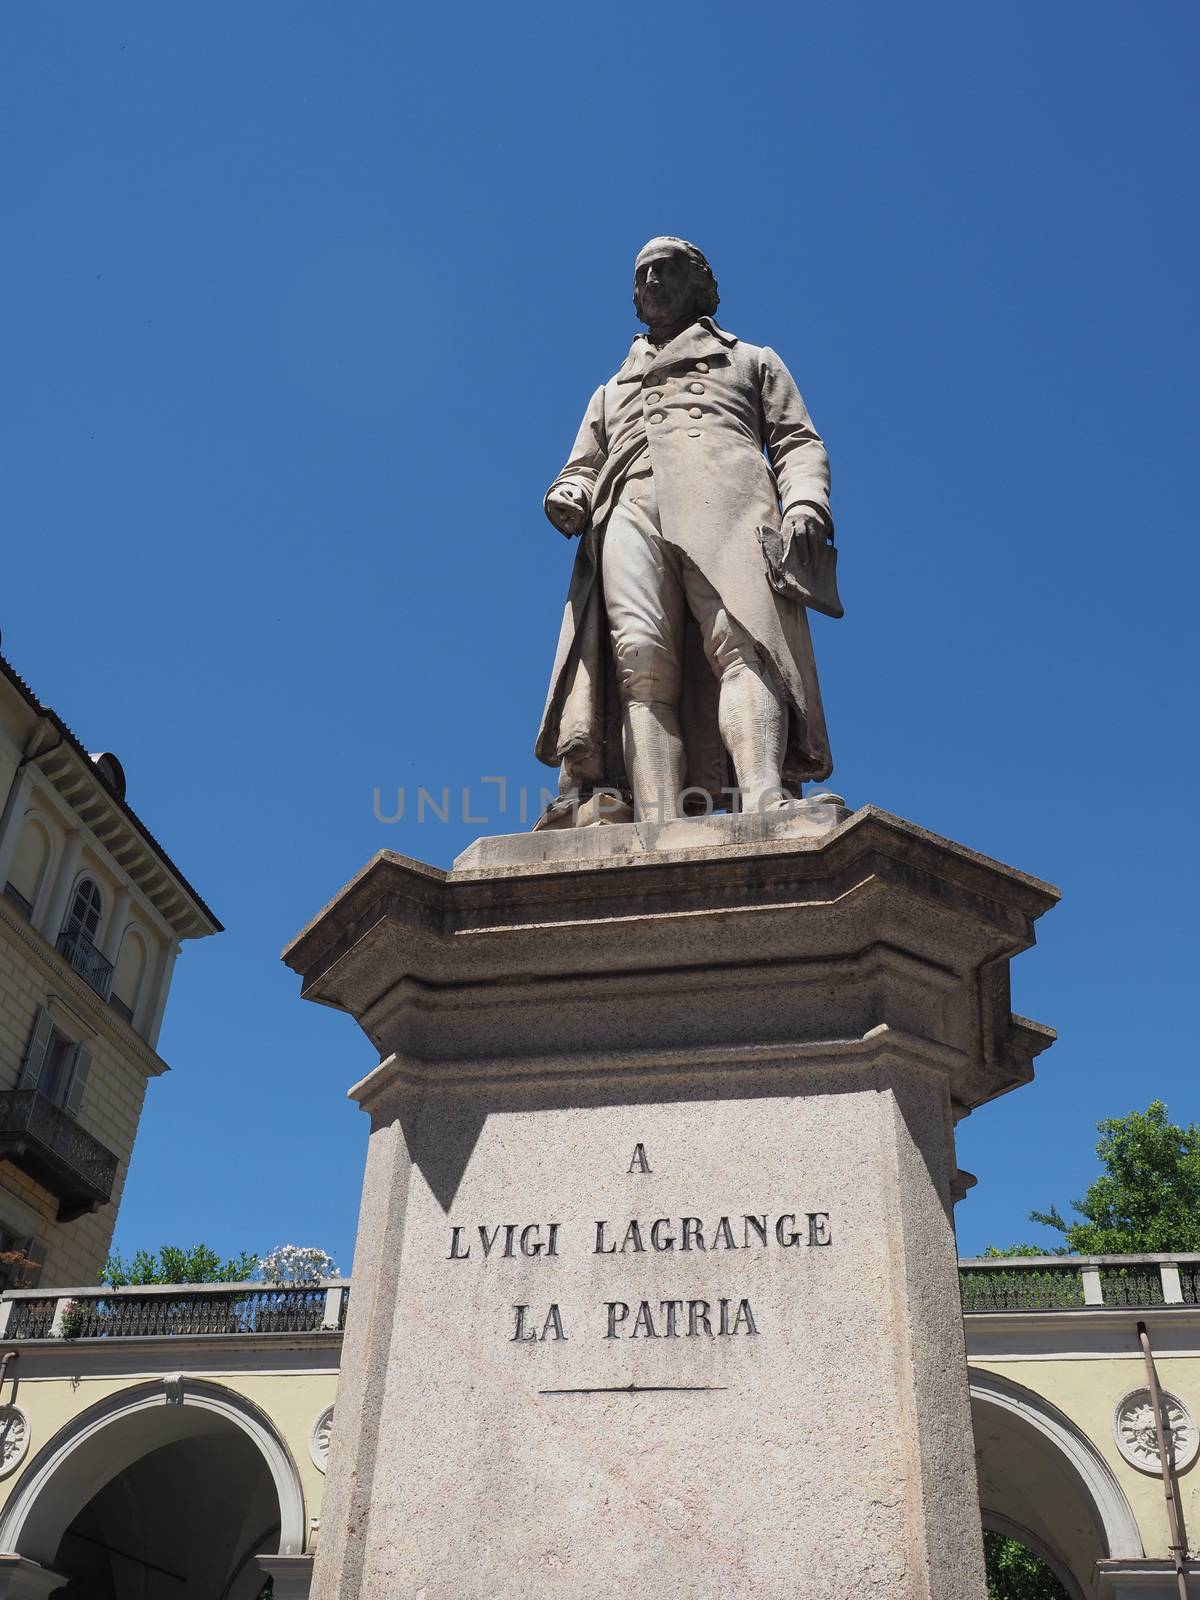 Mathematician Lagrange monument circa 1867 in Turin, Italy (Translation: To Luigi Lagrange. The Homeland)